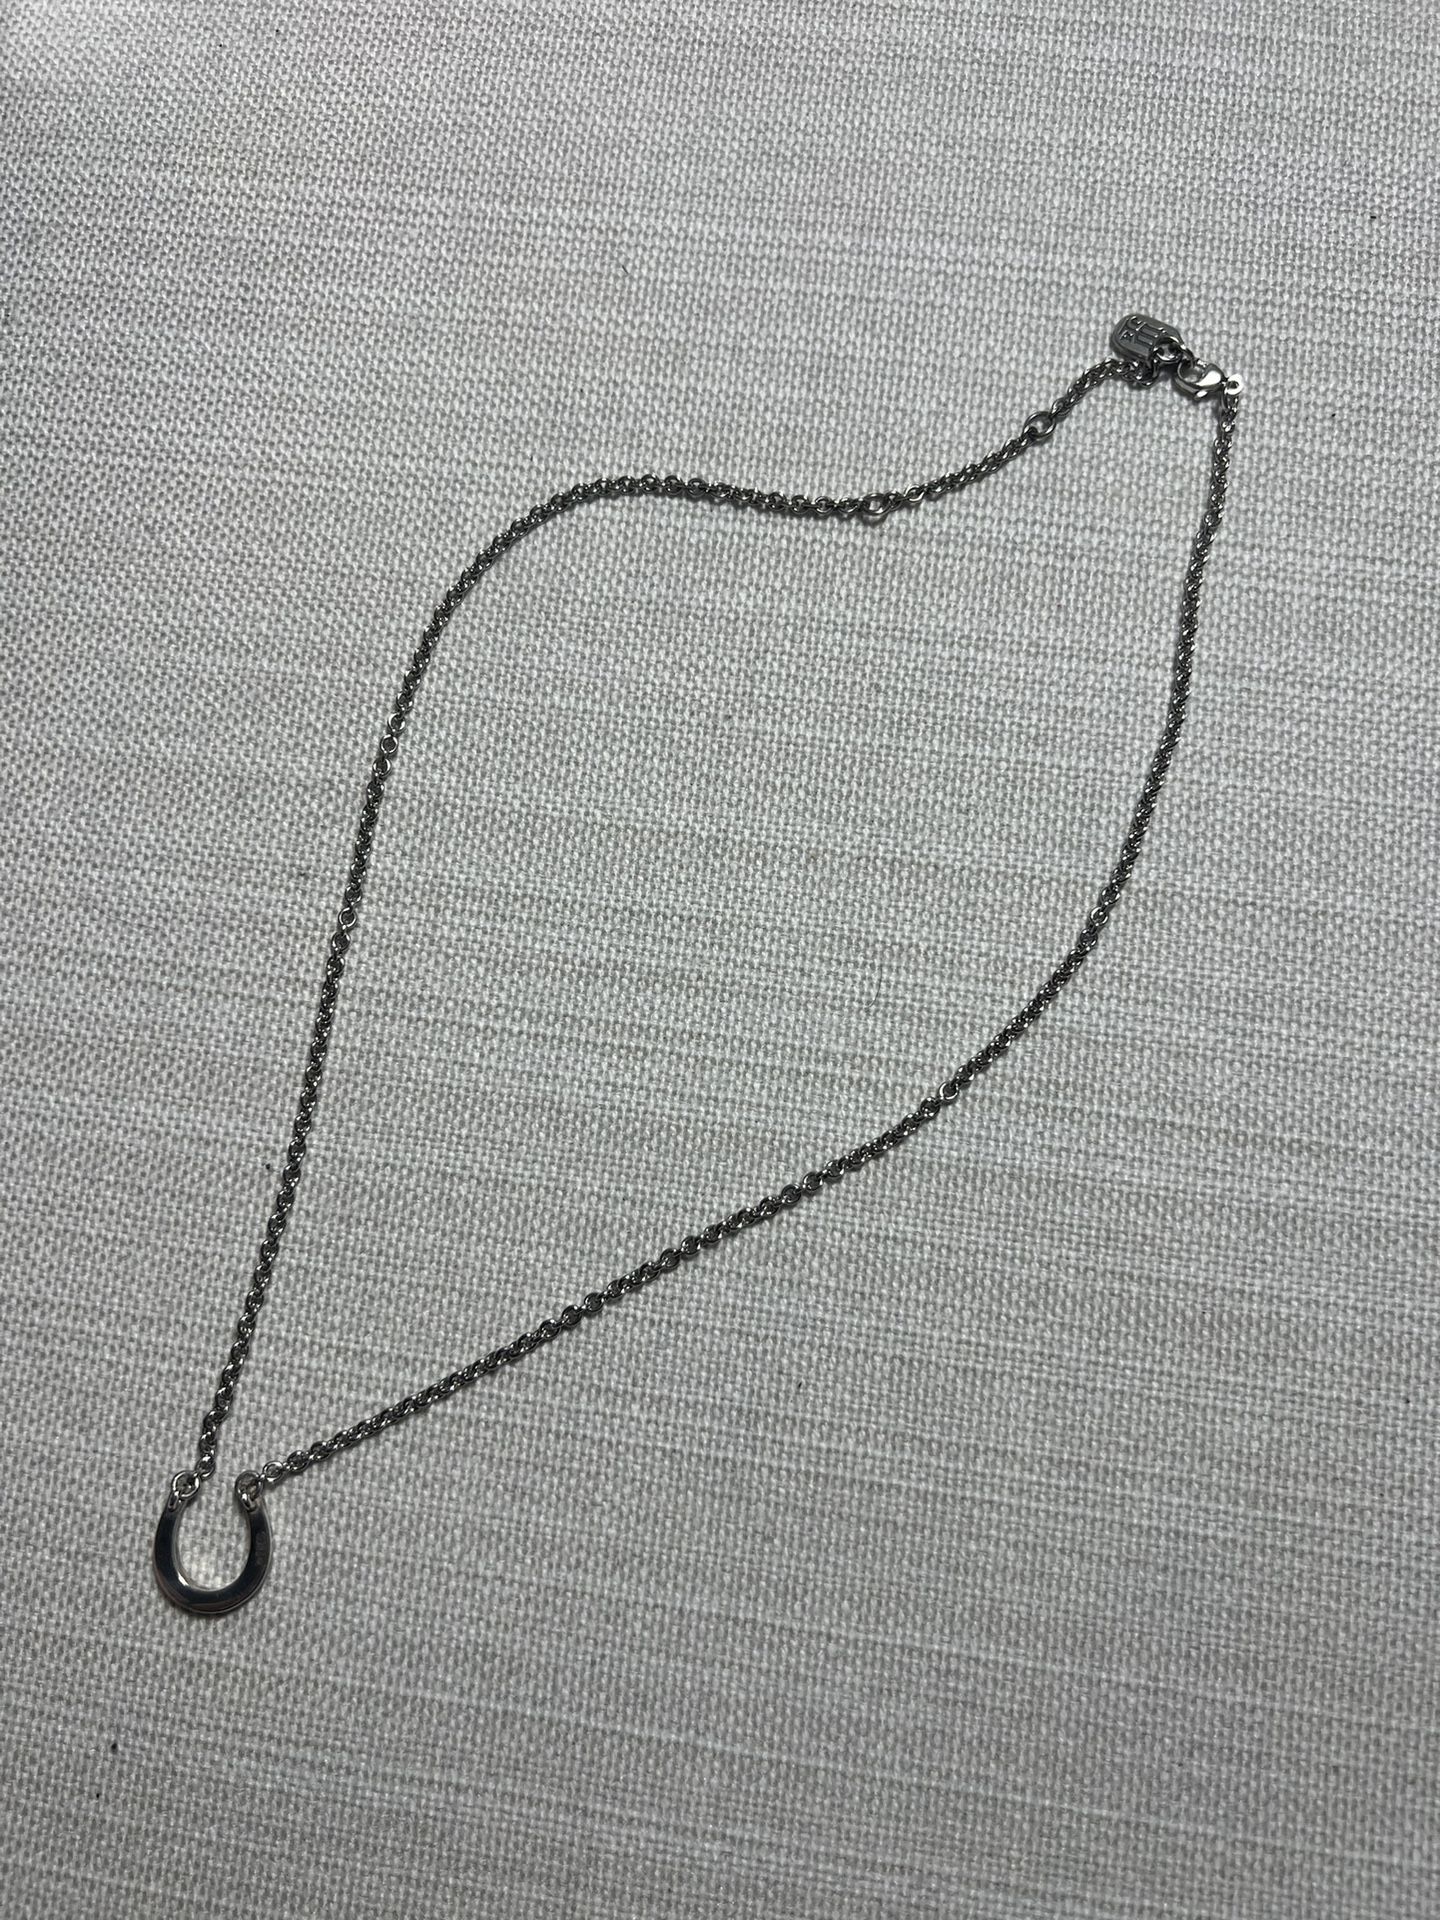 James Avery Horse Shoe Necklace 